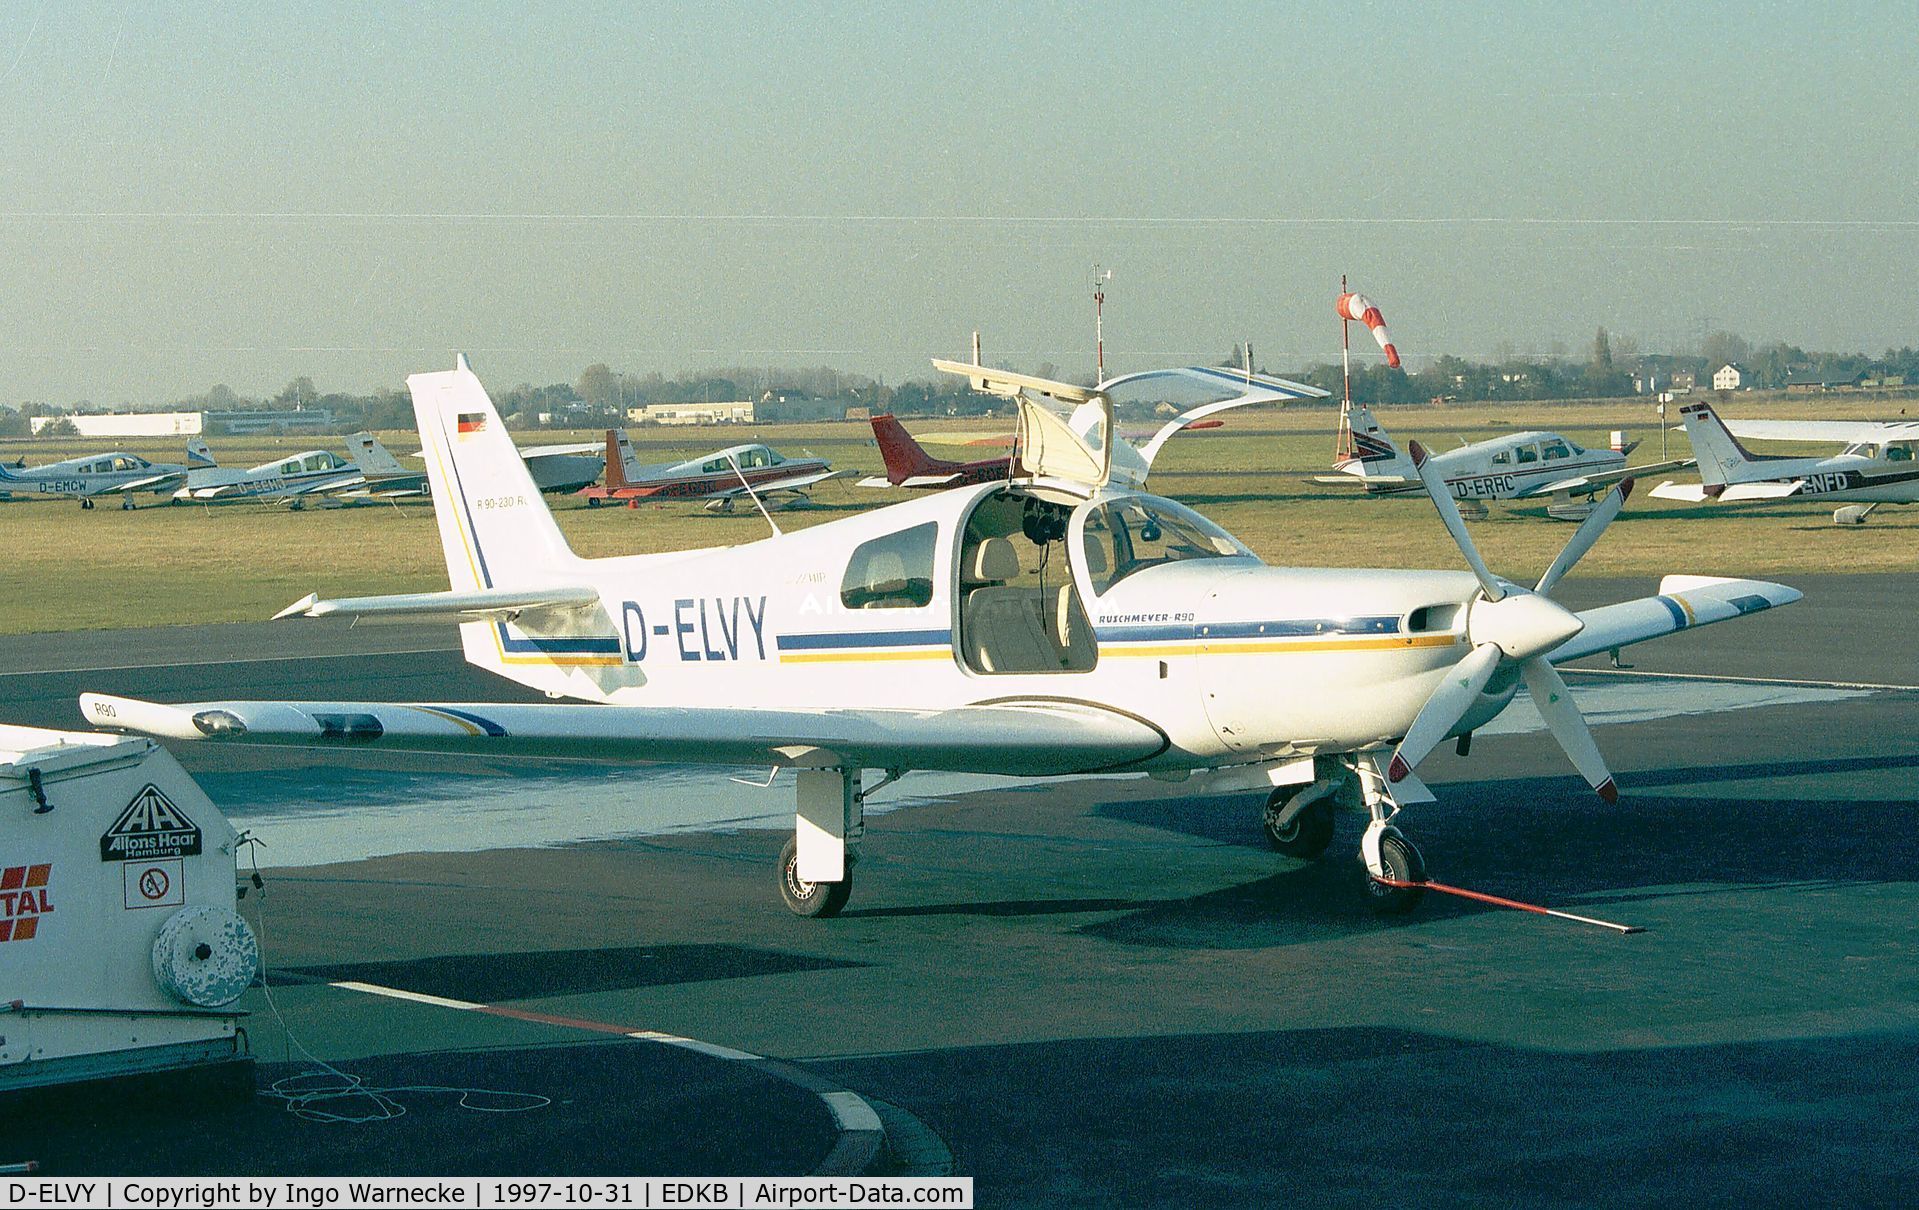 D-ELVY, Ruschmeyer R90-230 RG C/N 018, Ruschmeyer R.90-230RG at Bonn-Hangelar airfield